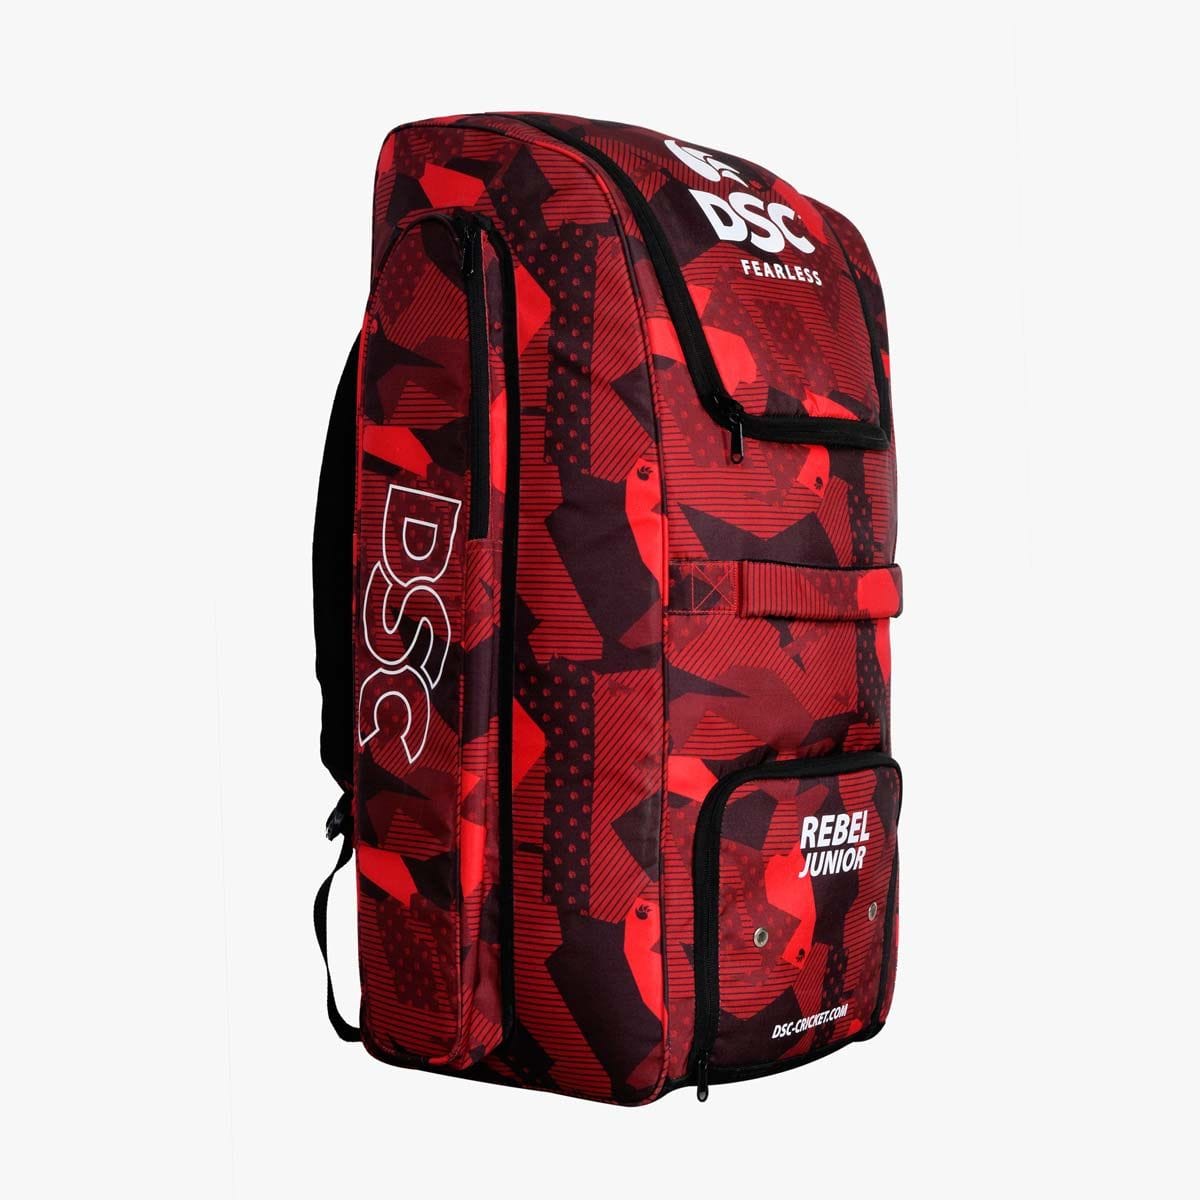 Adidas Cricket Bags DSC Rebel Junior Duffle Cricket Bag